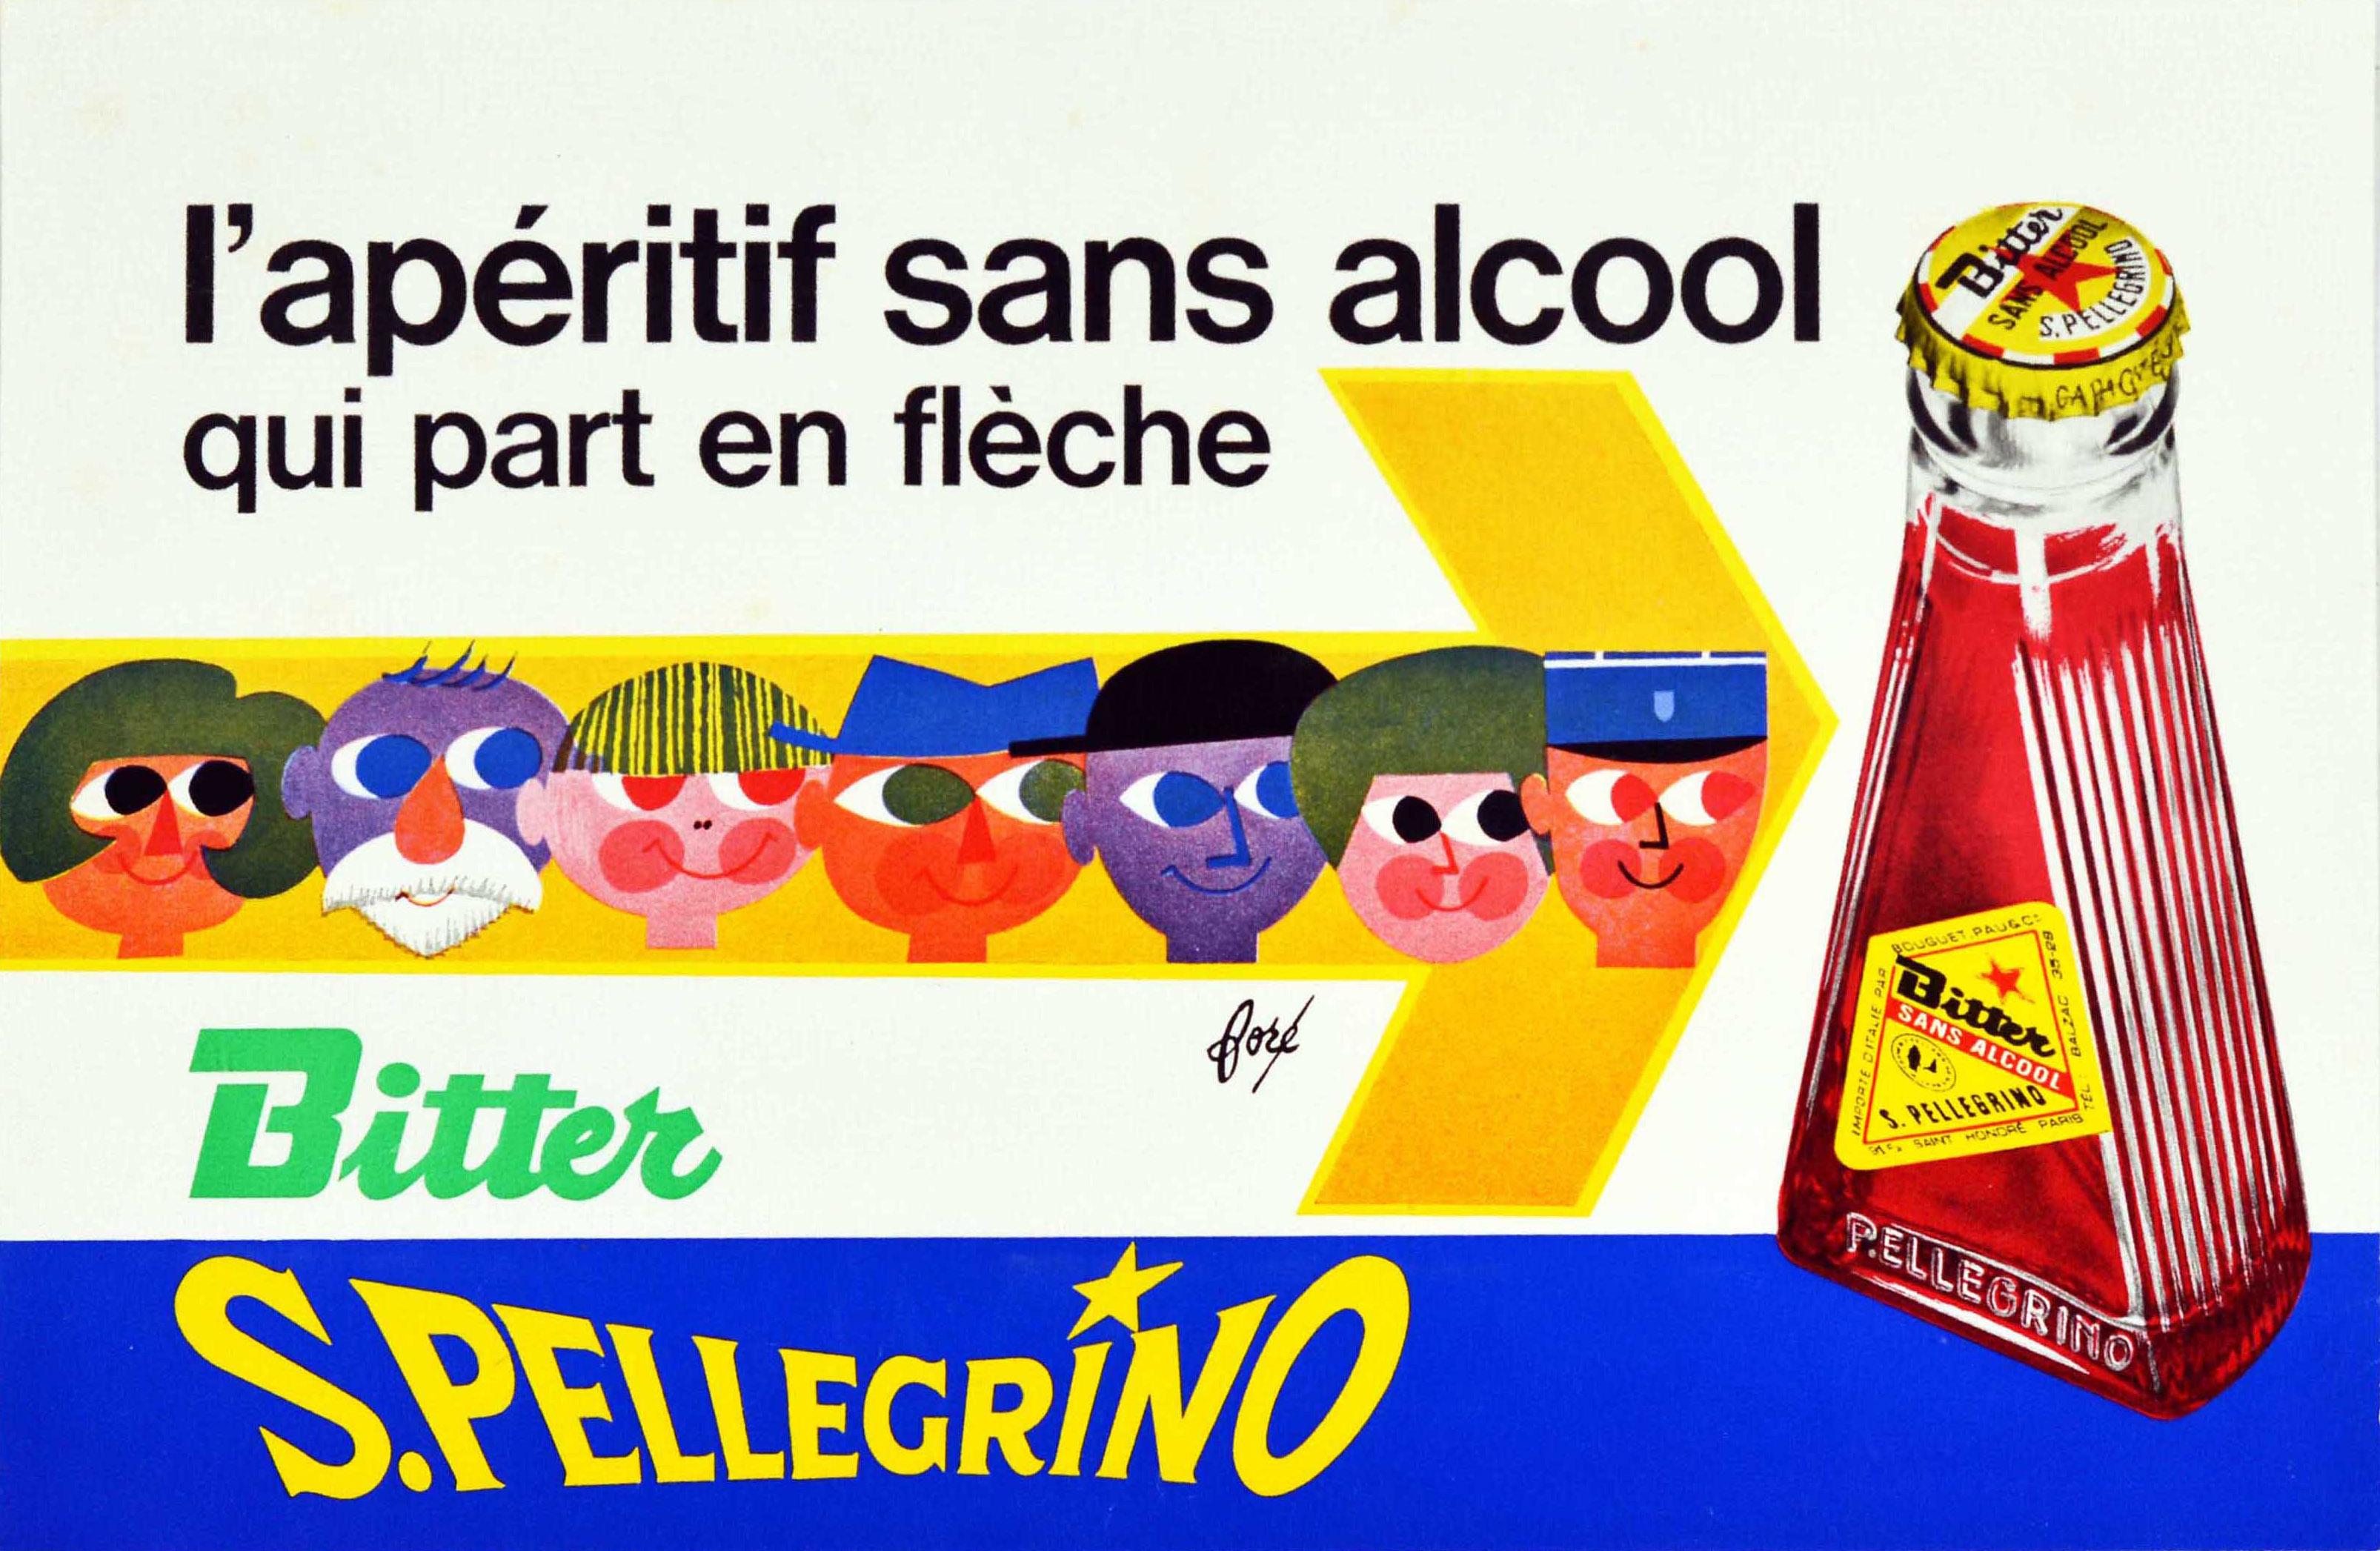 Unknown Print - Original Vintage Drink Poster San Pellegrino Bitter Aperitif Qui Part En Fleche